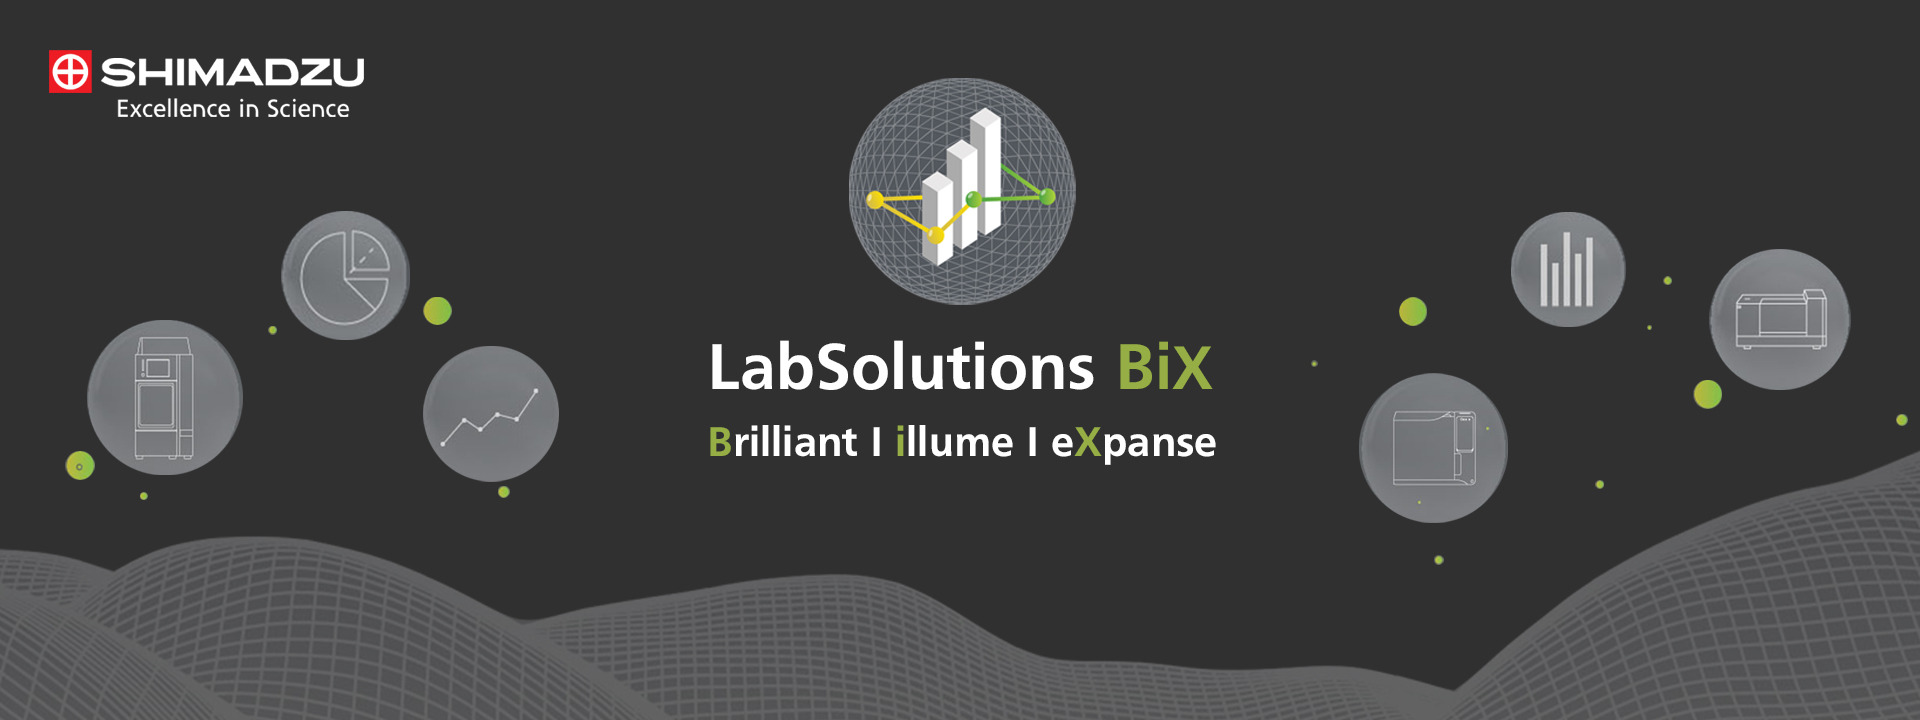 Shimadzu-LabSolutions-BiX-Updated-Web-Banner